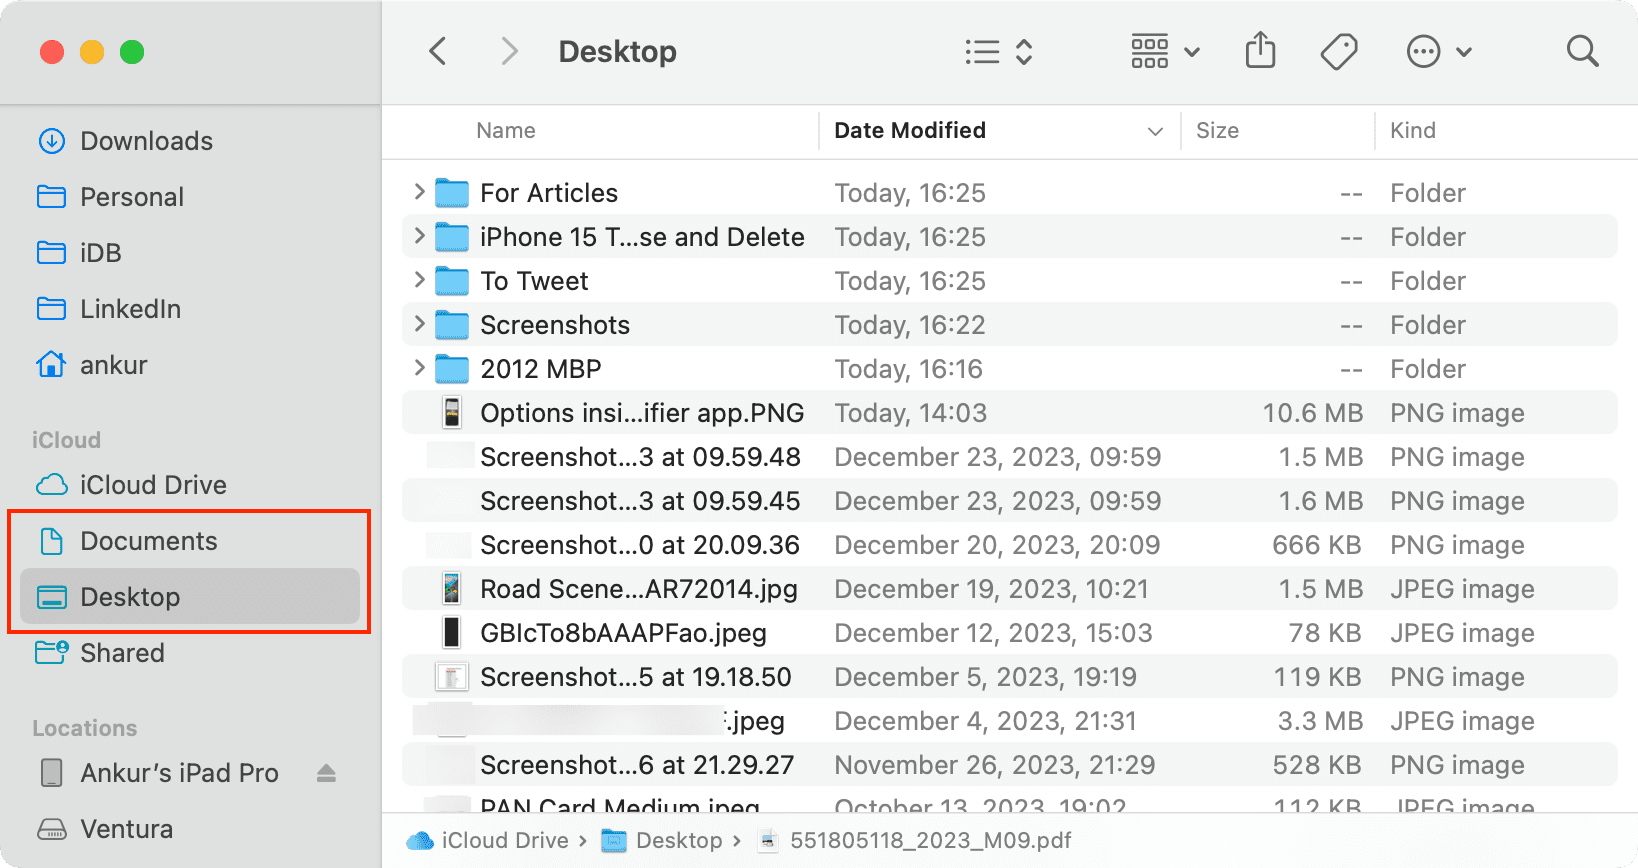 Documents and Desktop folder under iCloud Drive in Finder